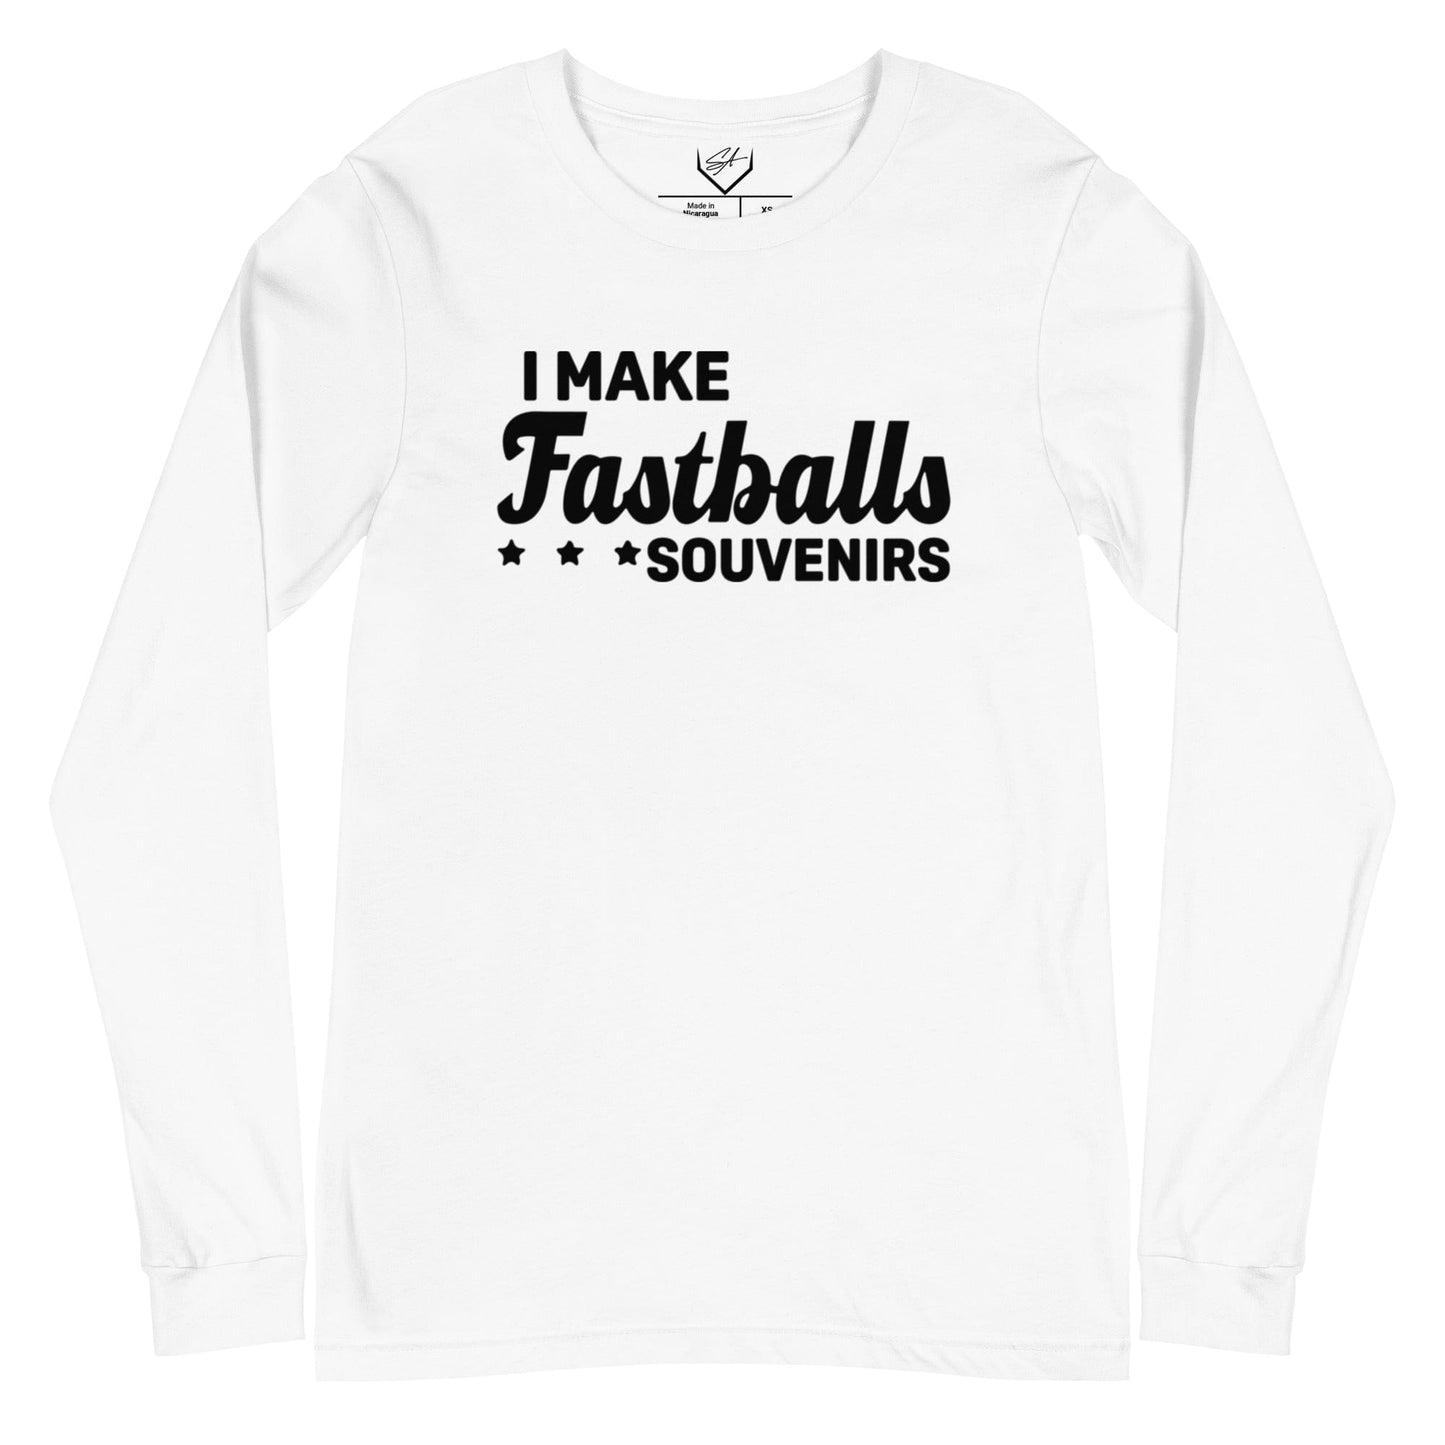 I Make Fastballs Souvenirs - Adult Long Sleeve